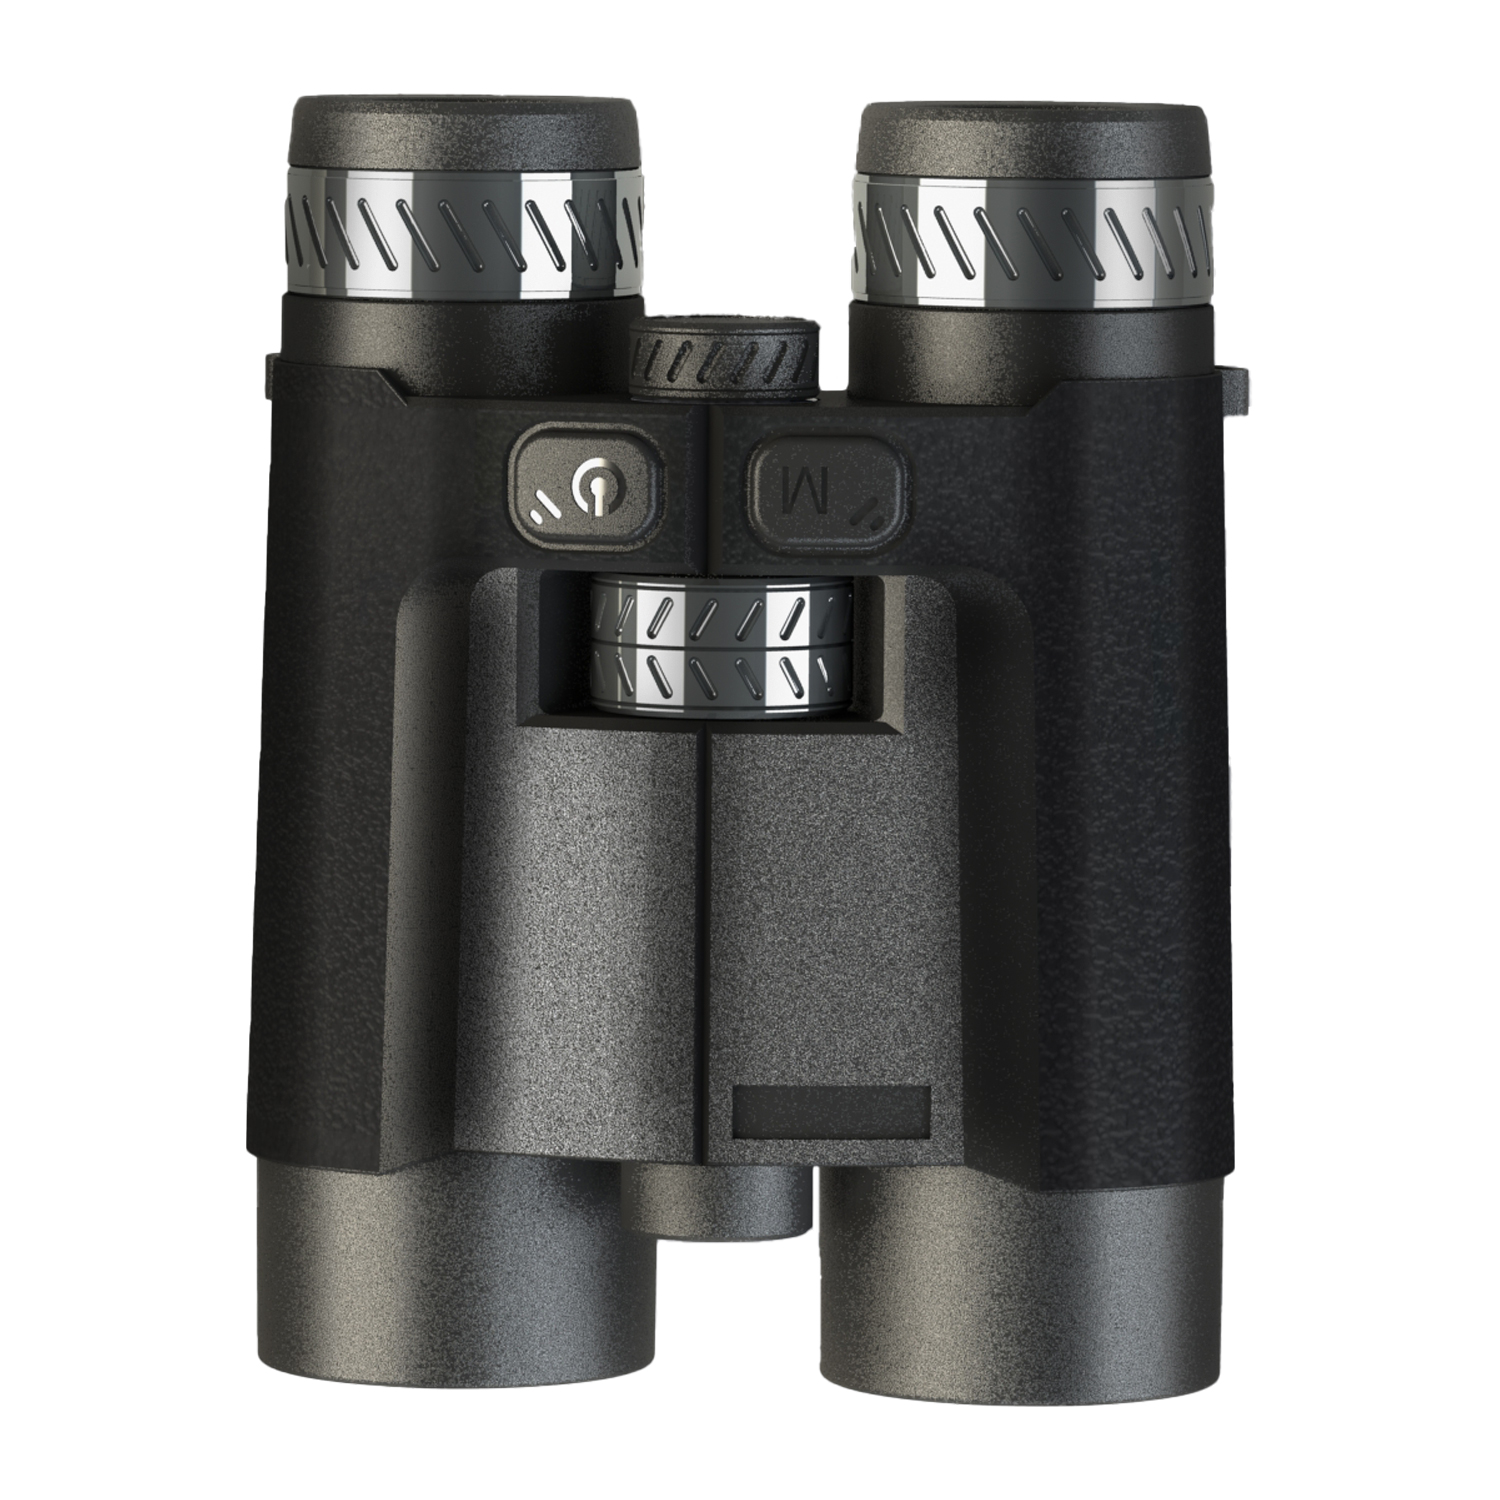 The applications of rangefinding binoculars